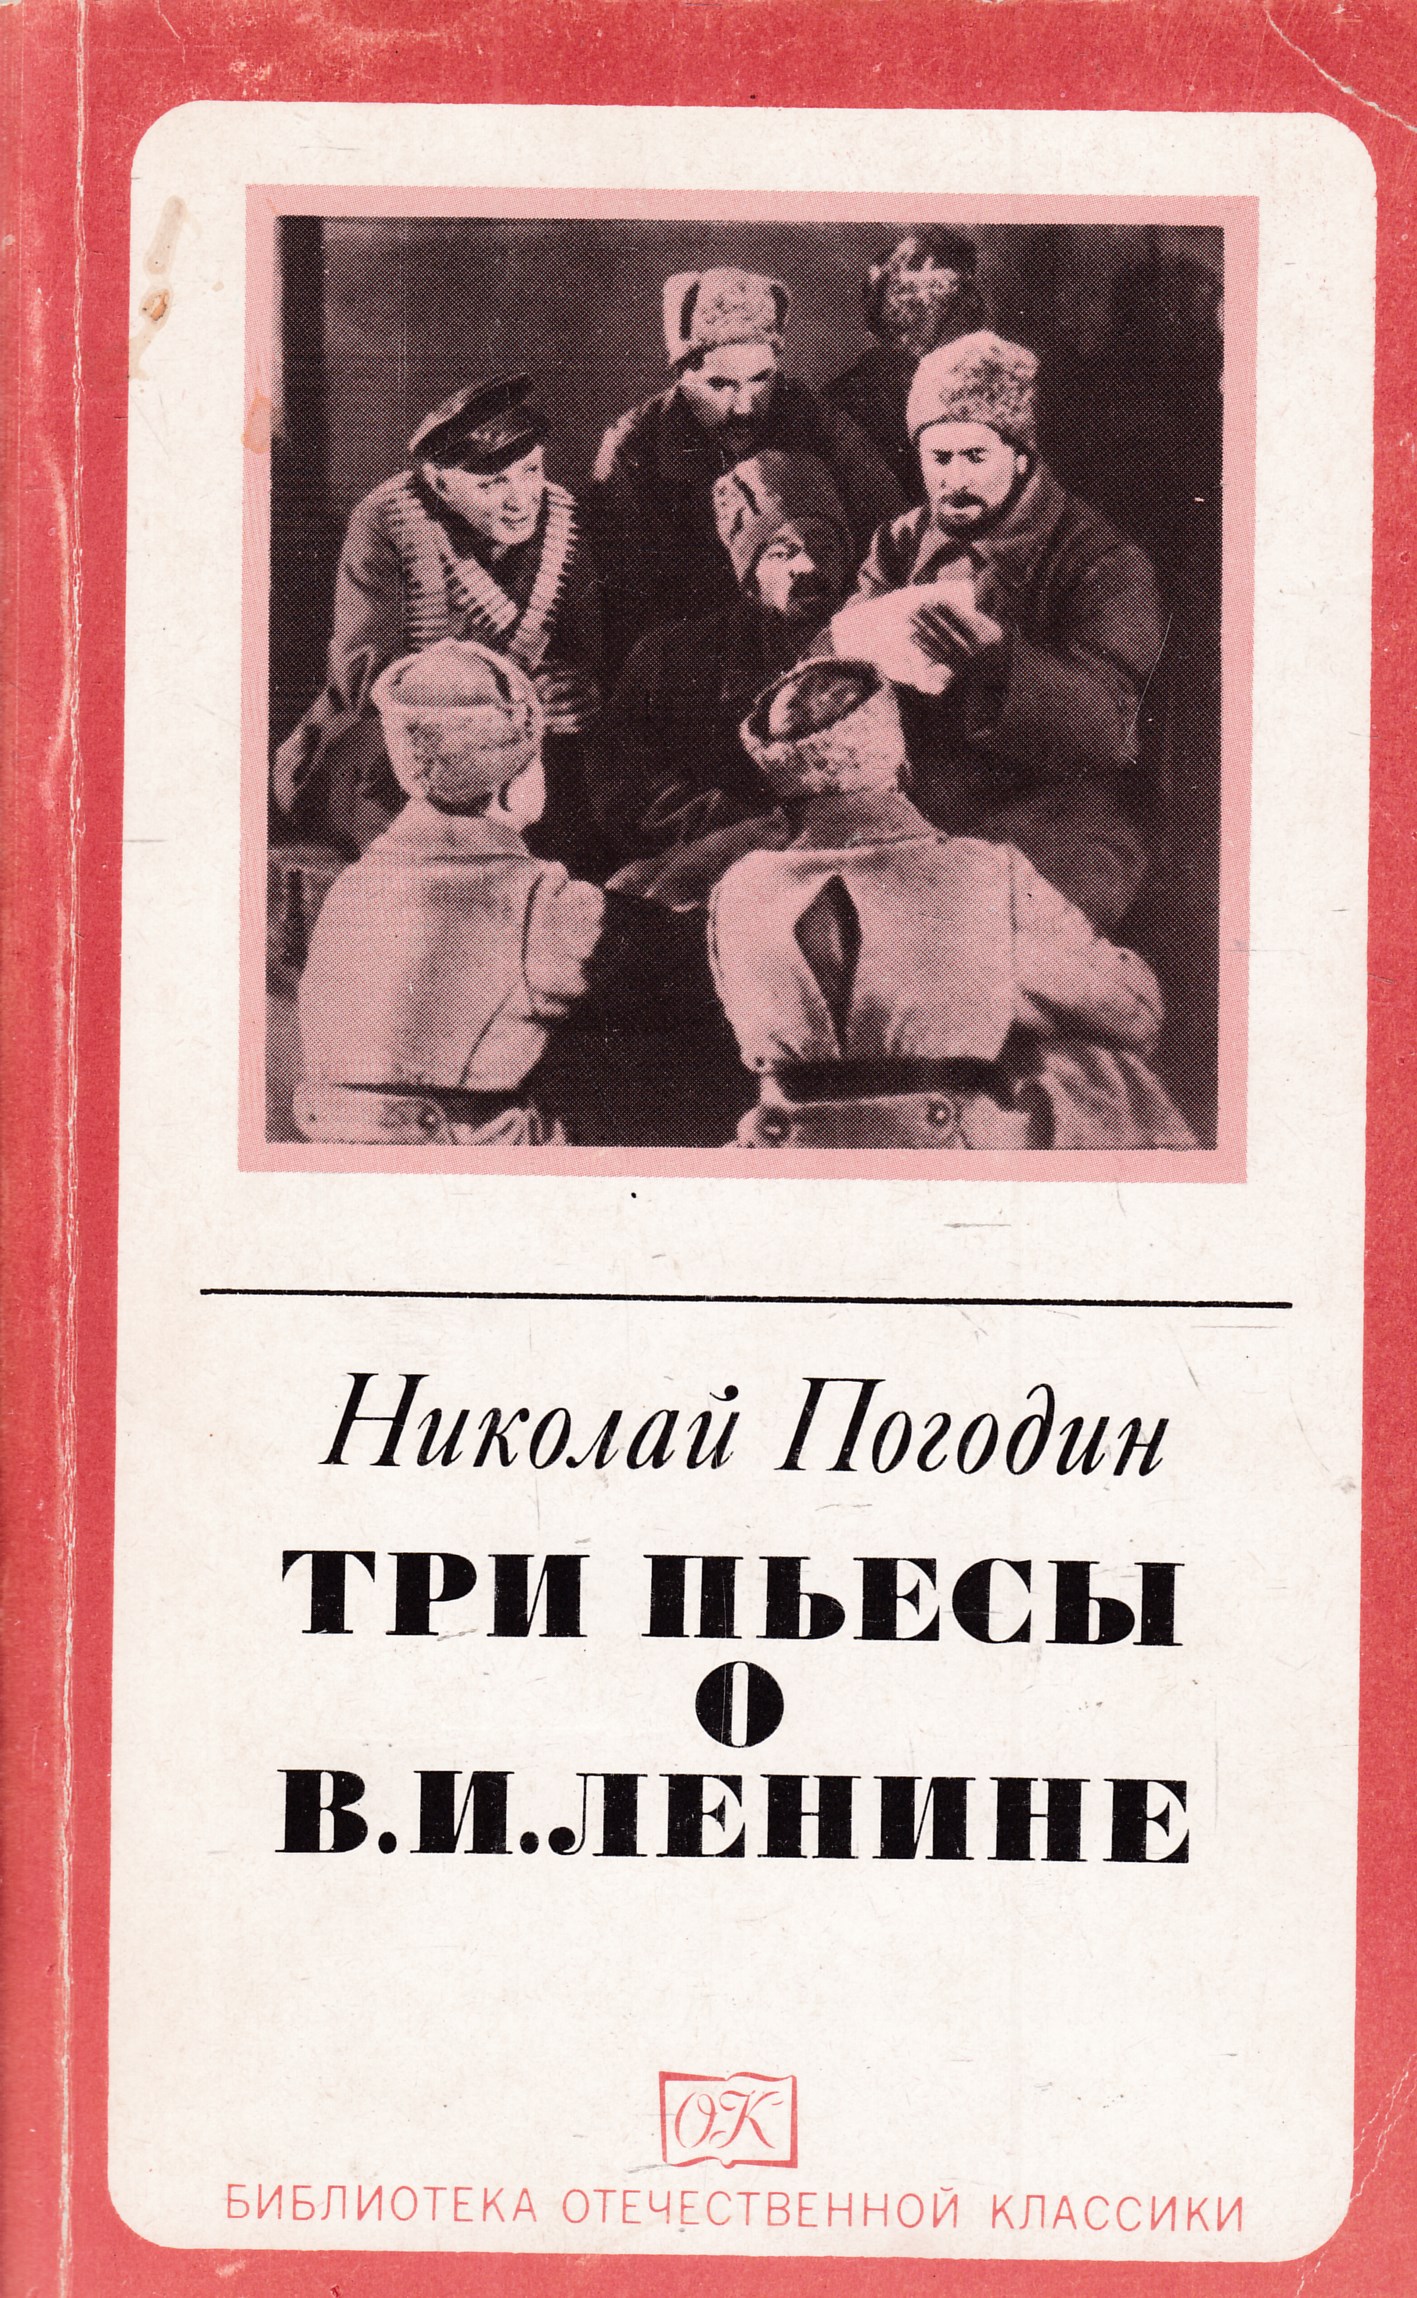 Жизнь и творчество погодина. Книга Ленин.